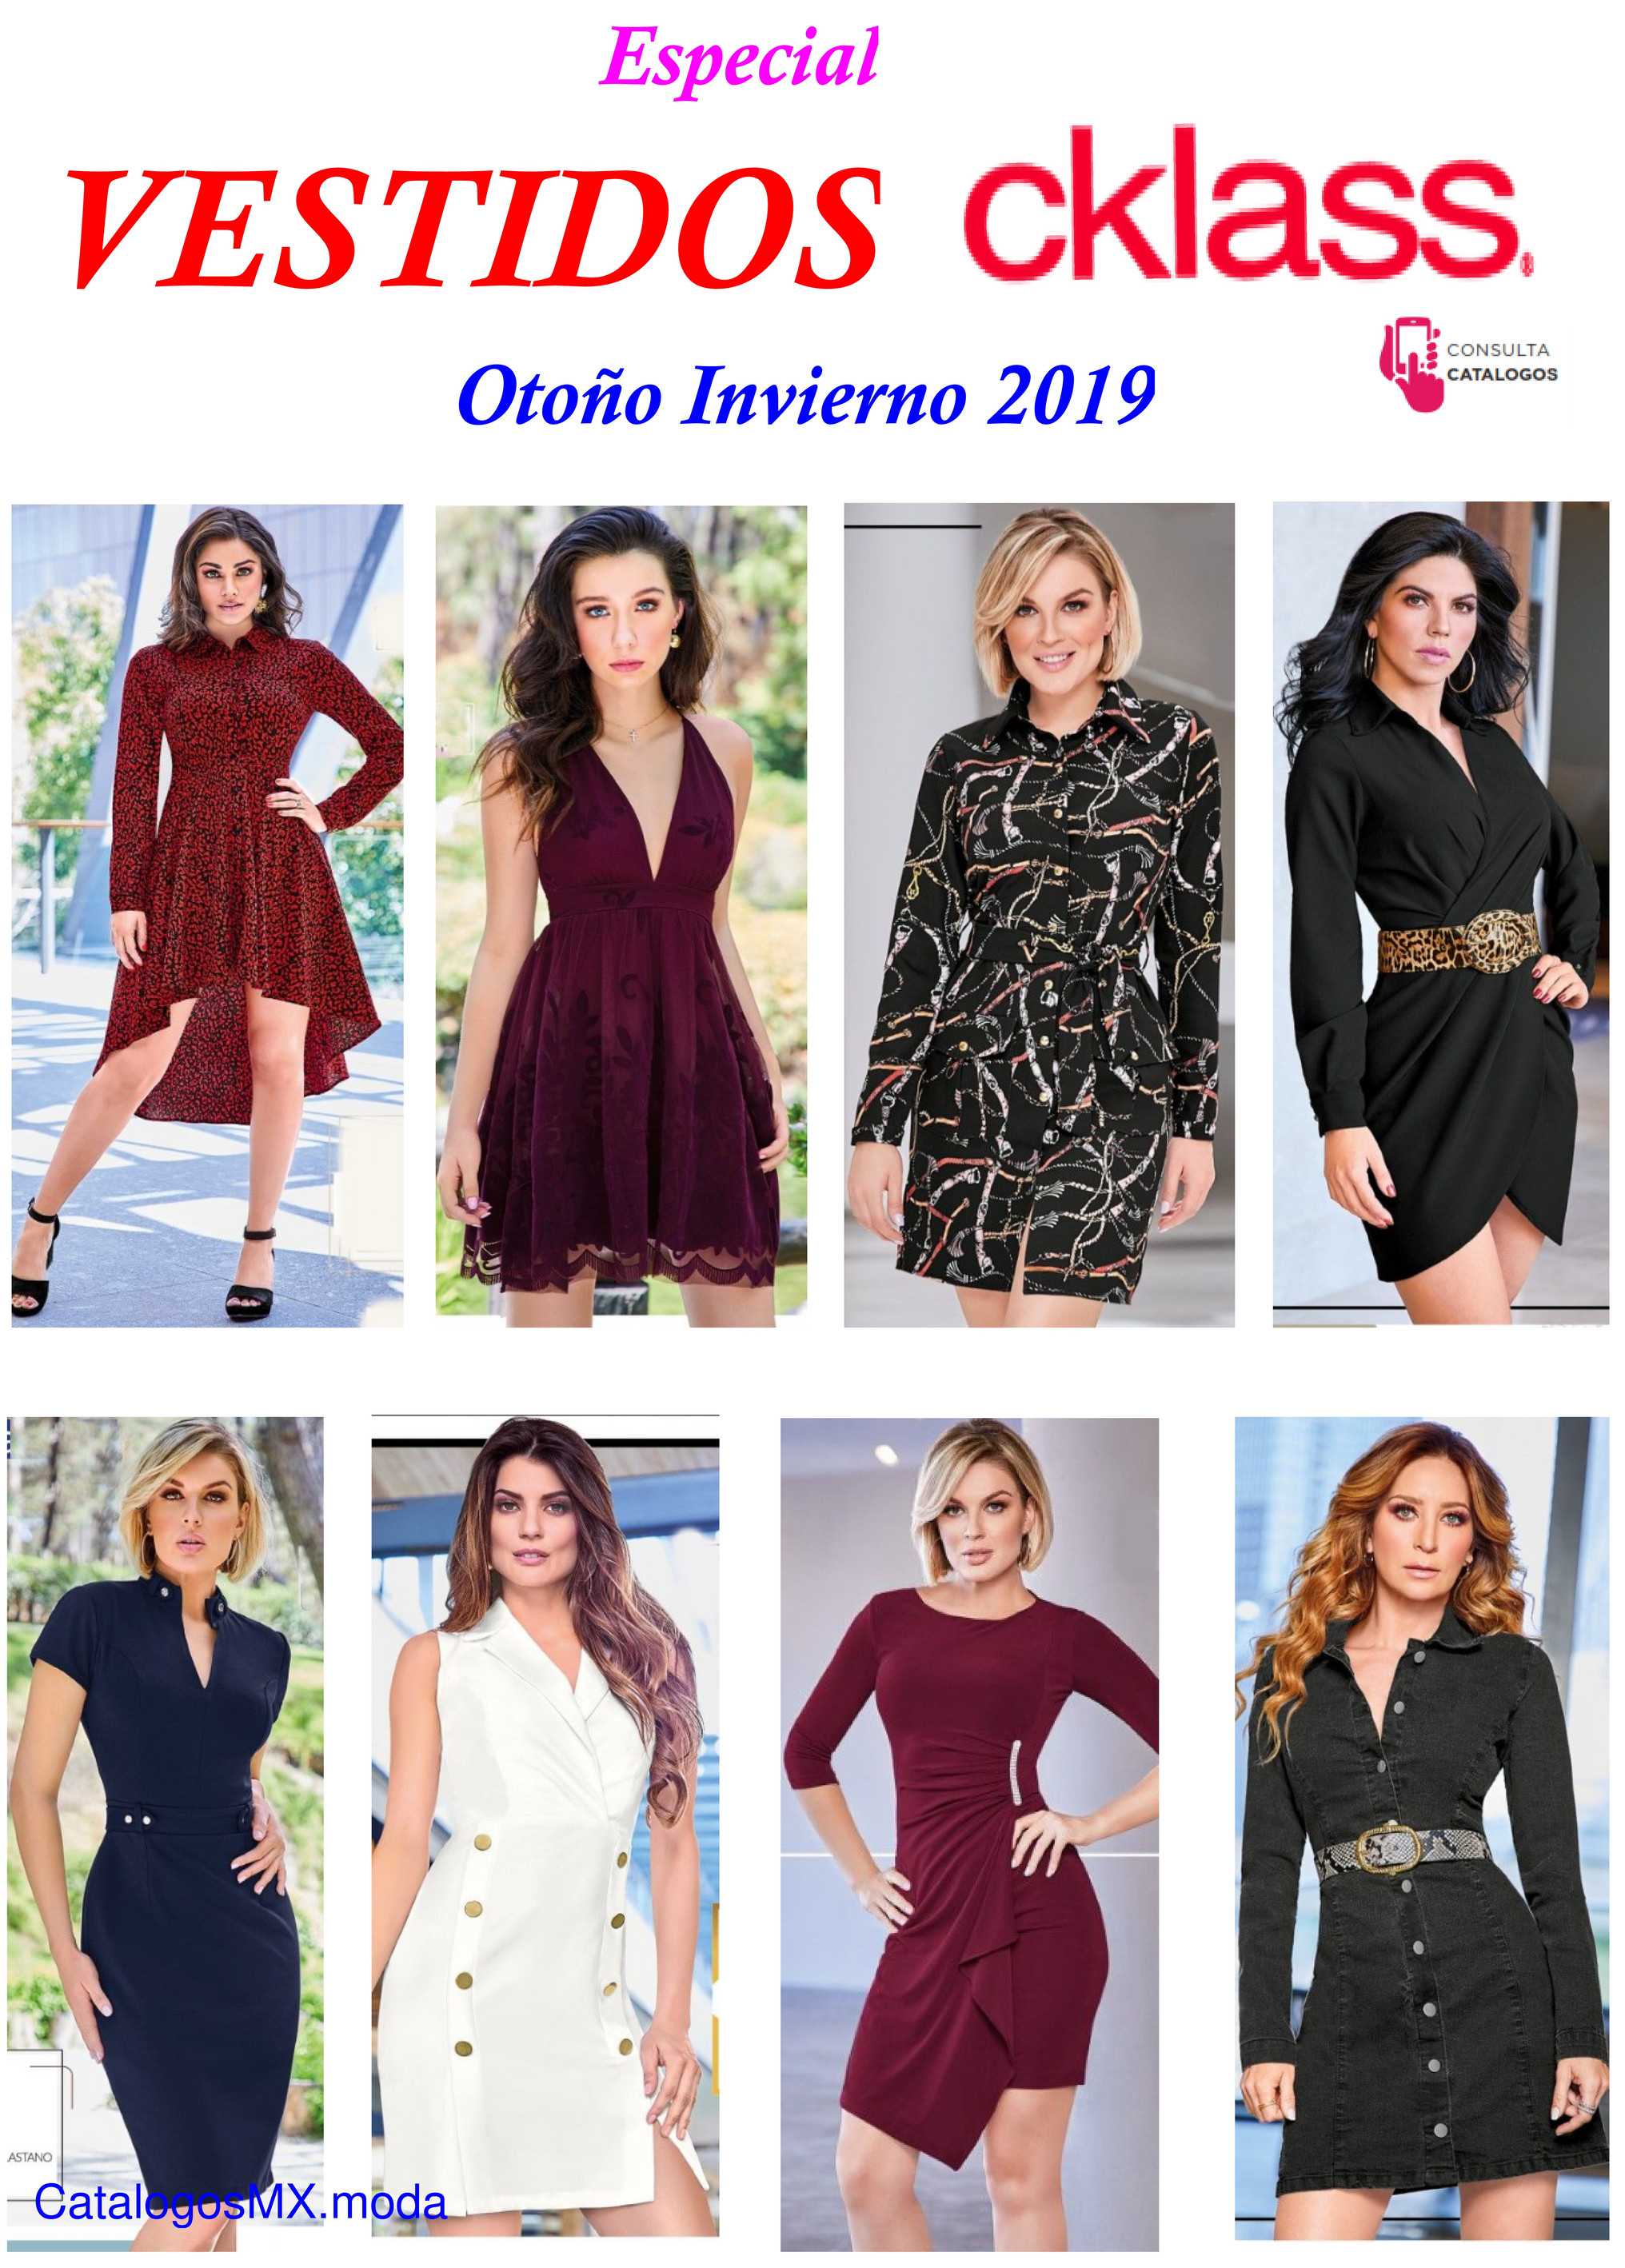 Vestidos Cklass 2019 Catalogo Cheapest Sales, Save 42% 